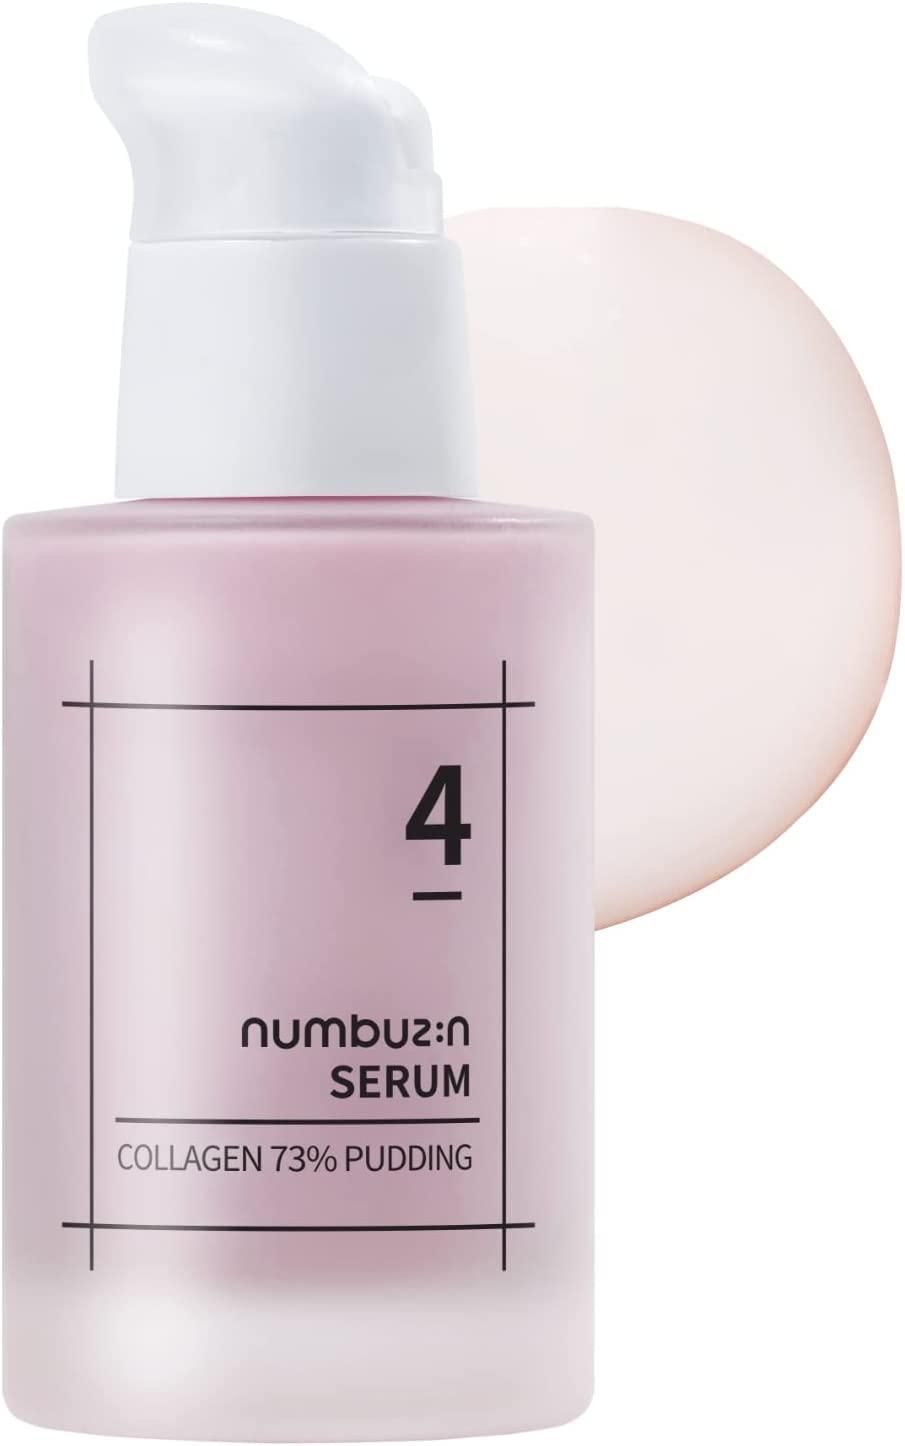 Numbuzin No.4 Collagen 73% Pudding Serum | Wrinkle Care, Aging Dull Skin, Brightening, Elastin, Hyaluronic Acid, Niacinamide | Korean Skin Care for Face, 1.69 fl oz